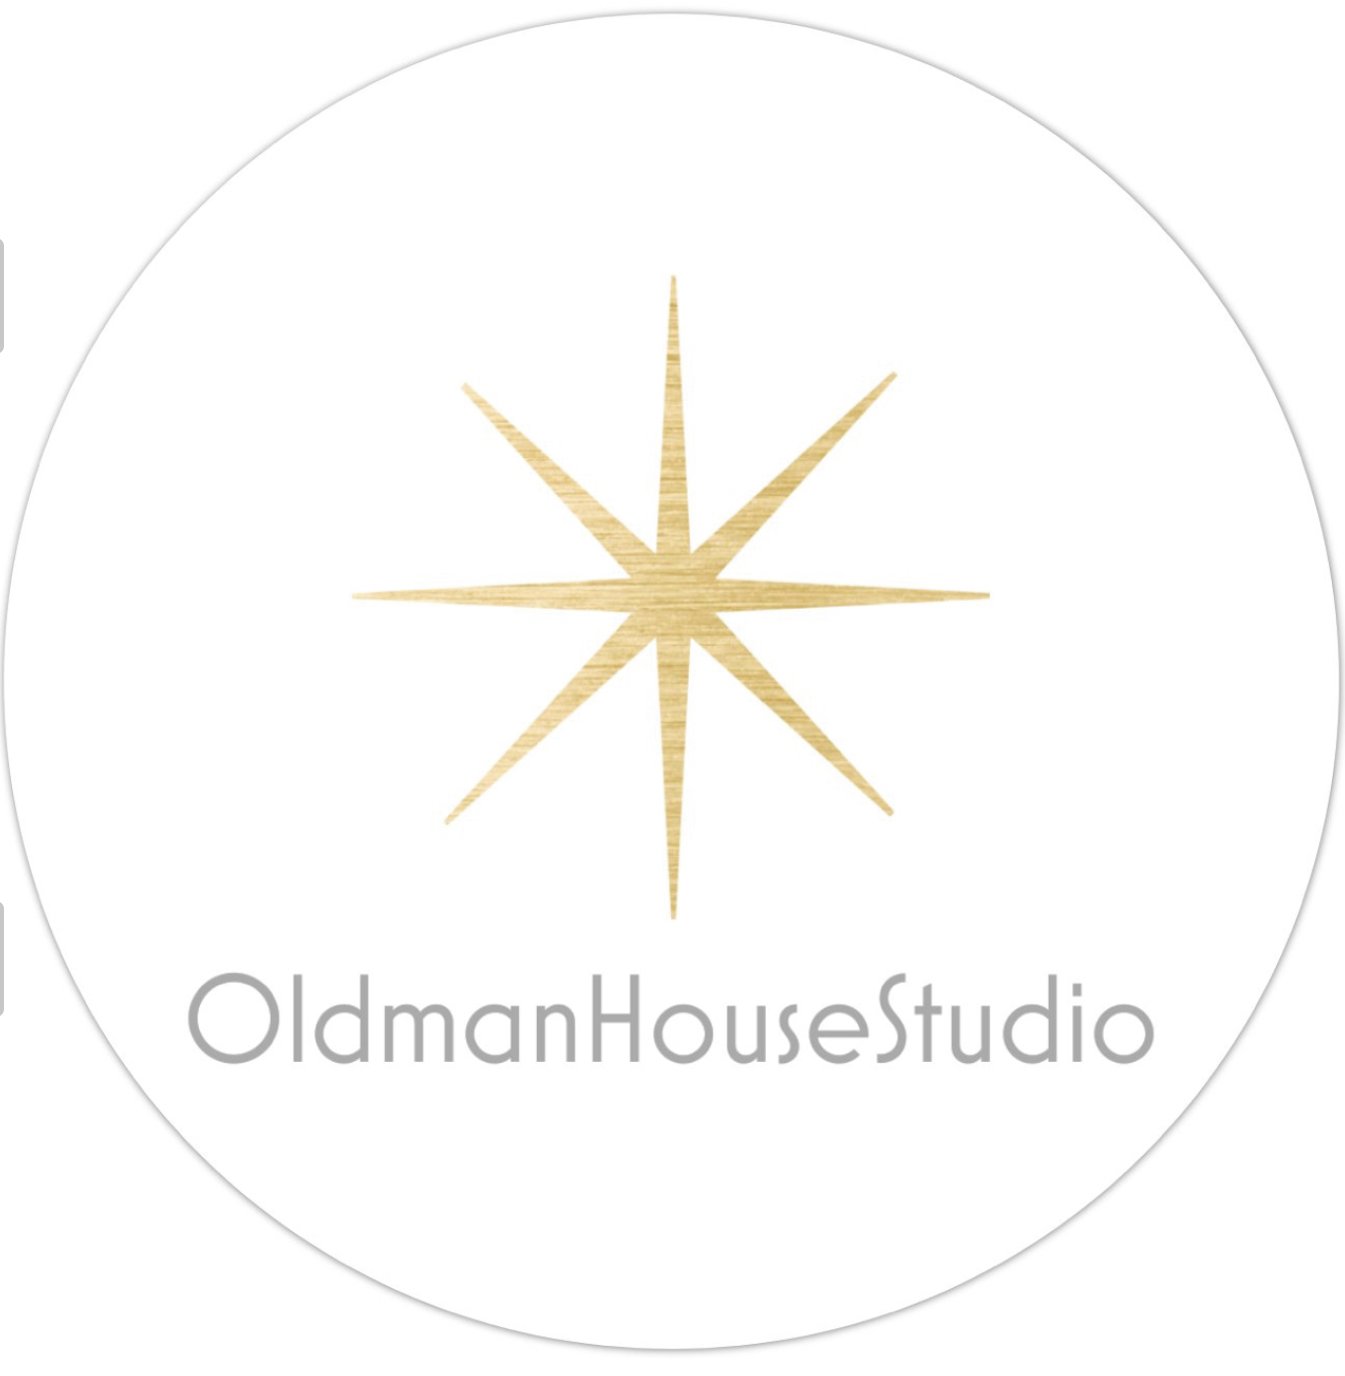 Oldman House Studio